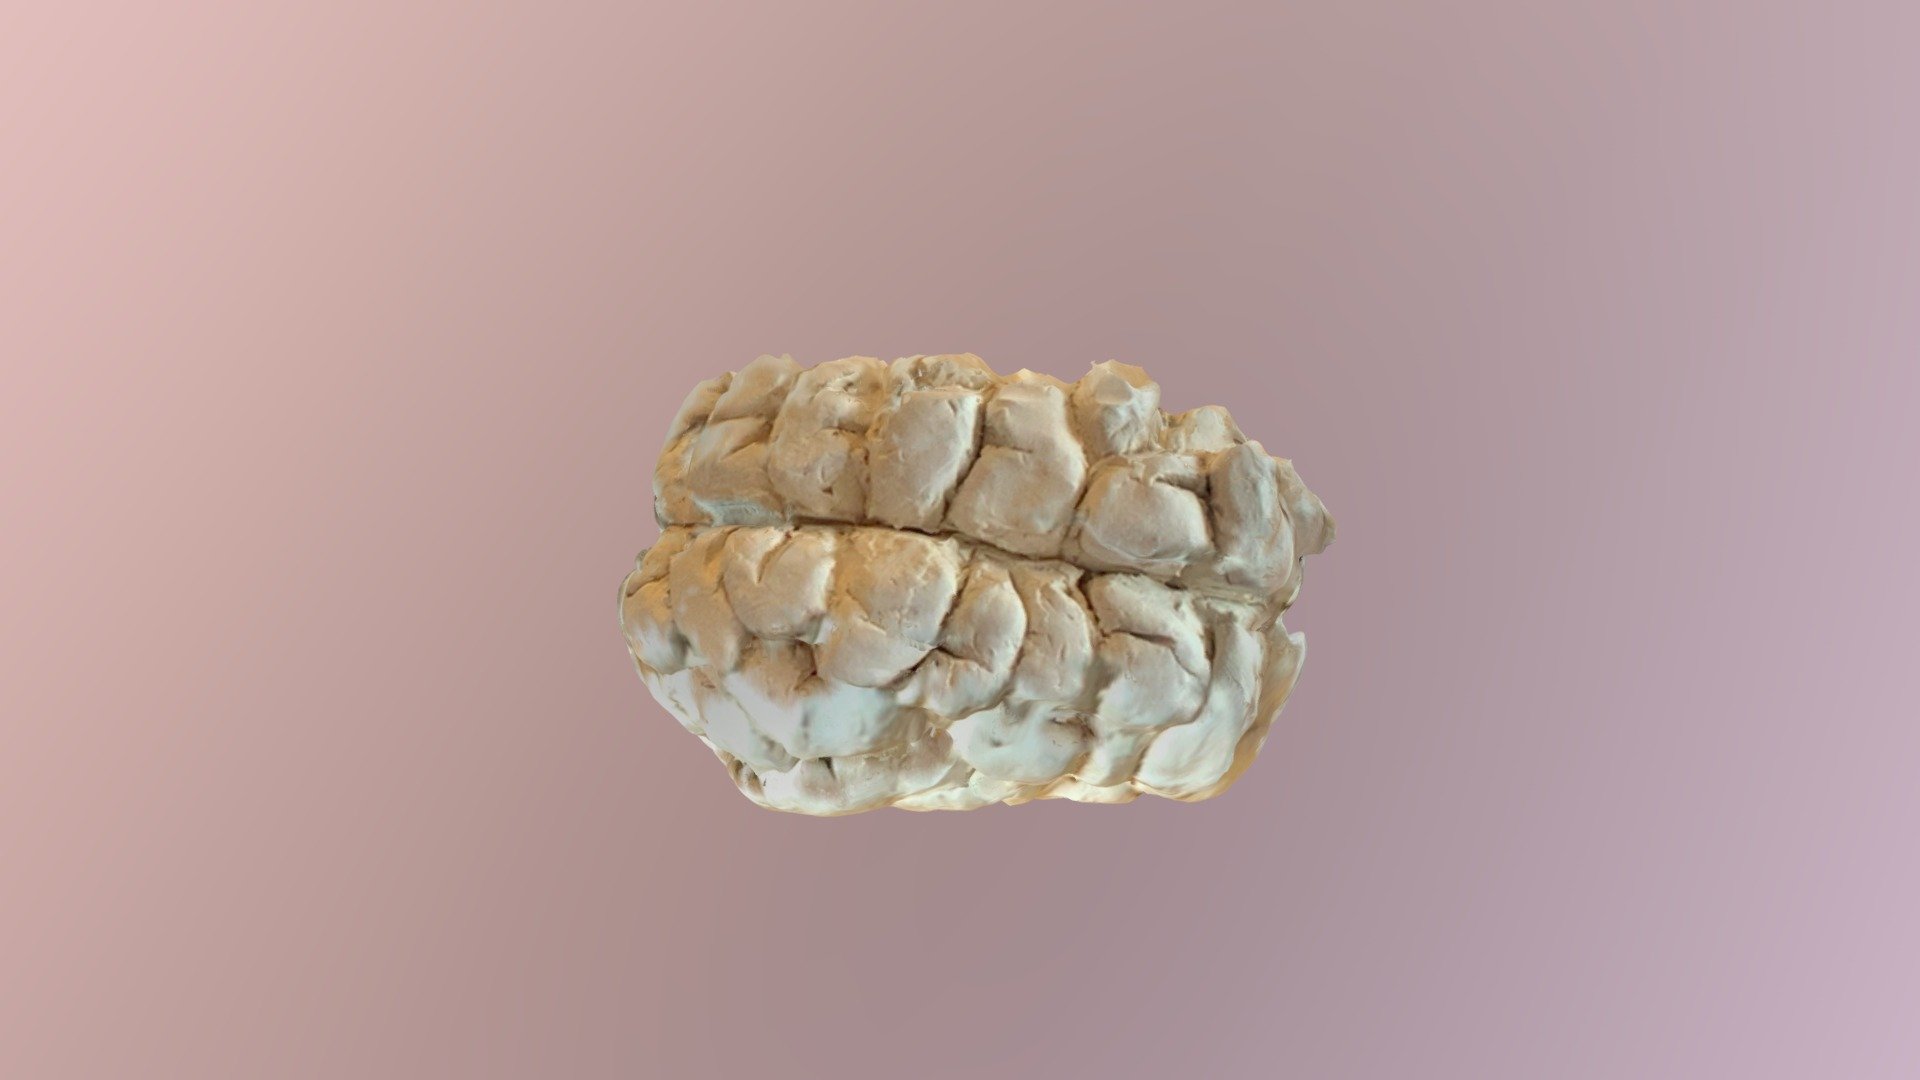 Brain - modeling clay